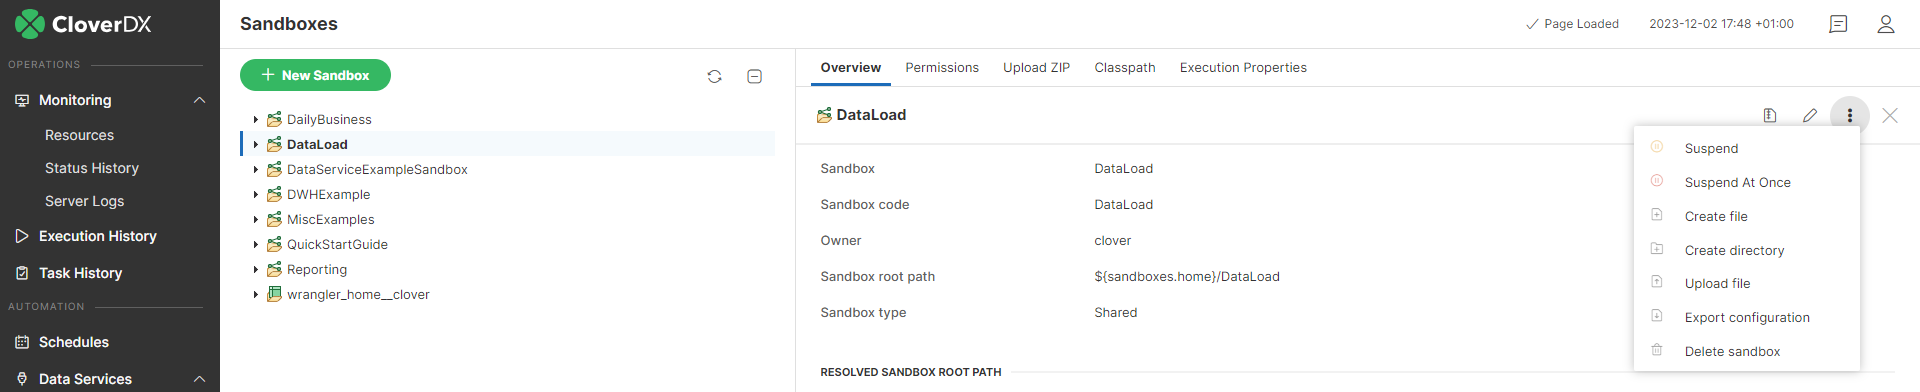 sandboxes file operations menu